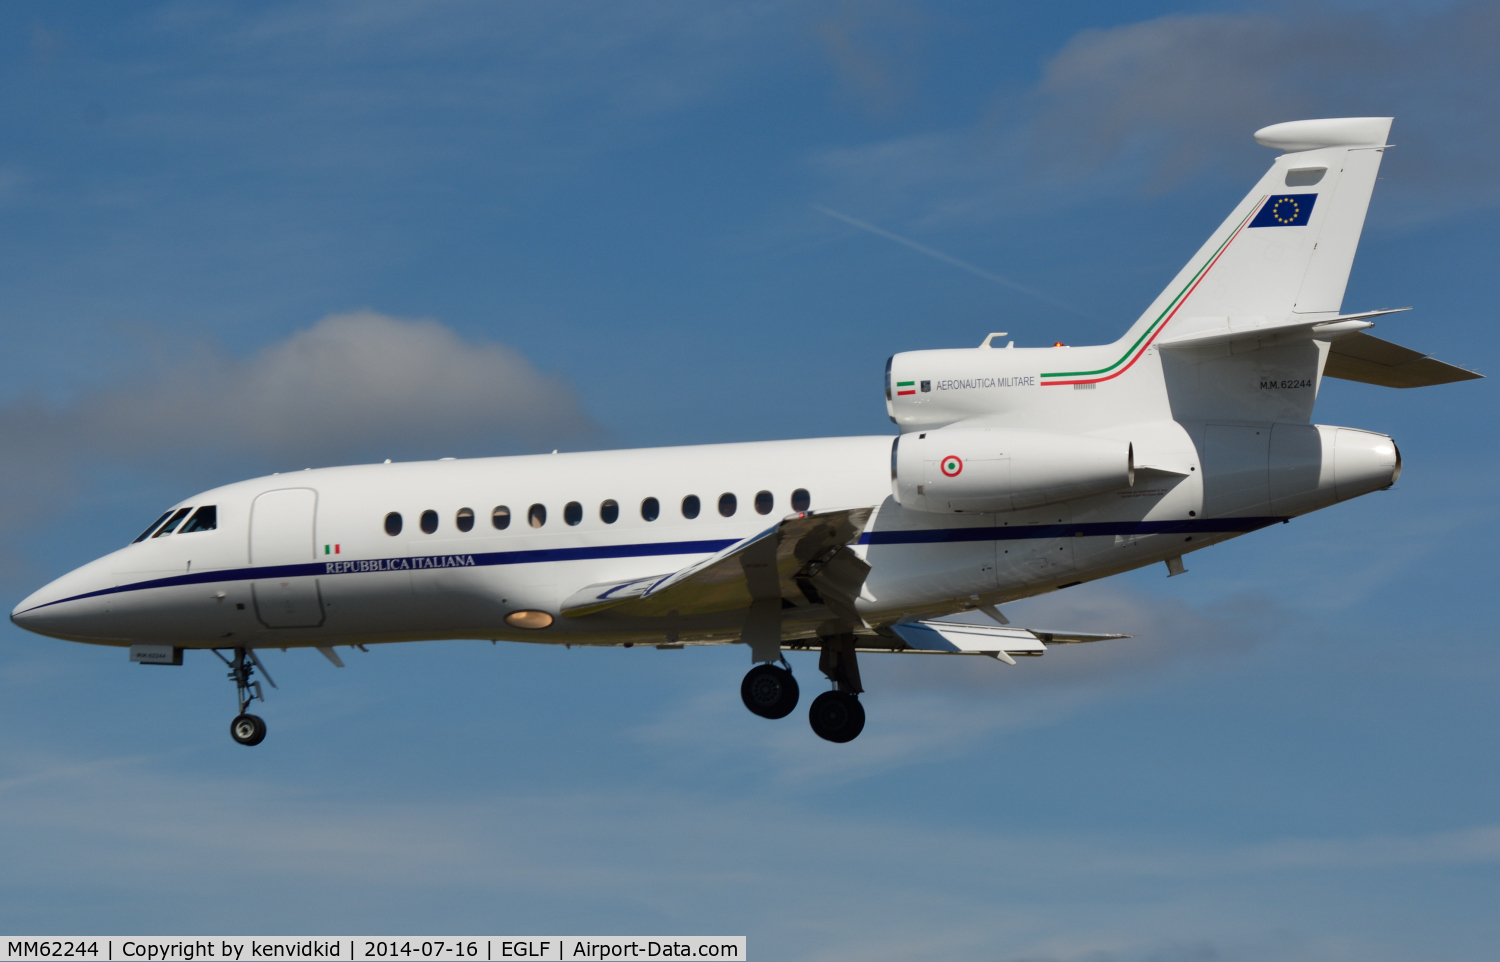 MM62244, 2005 Dassault Falcon 900EX C/N 149, VIP arrival.